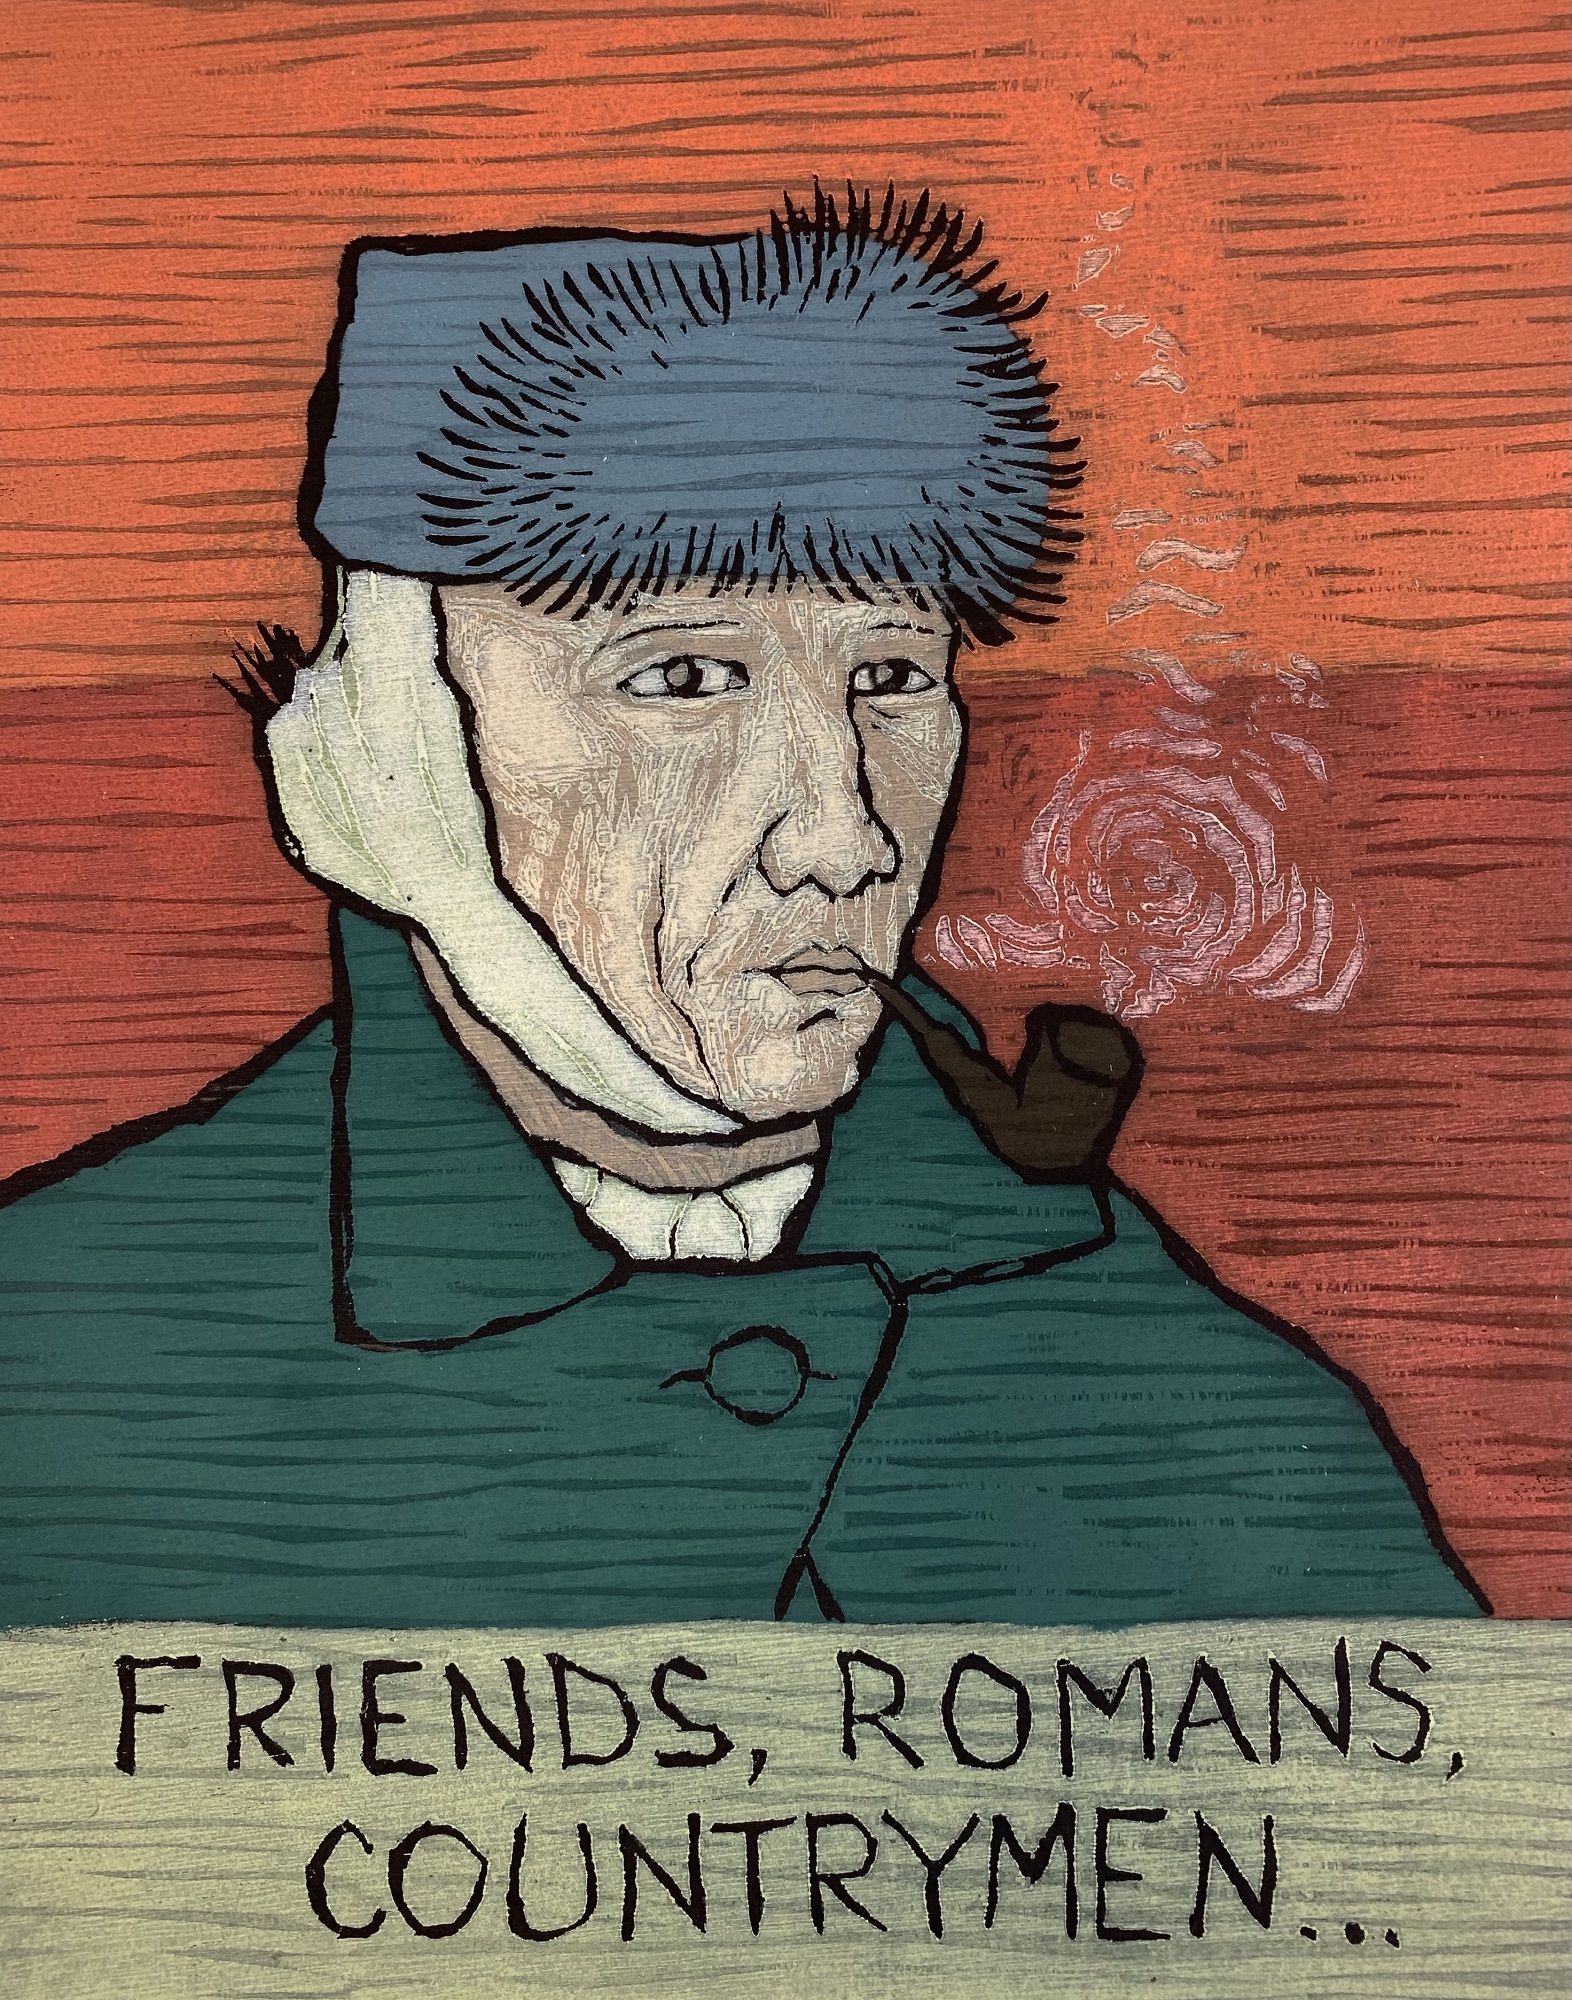 Friends, Romans, Countrymen by Mychael Barratt